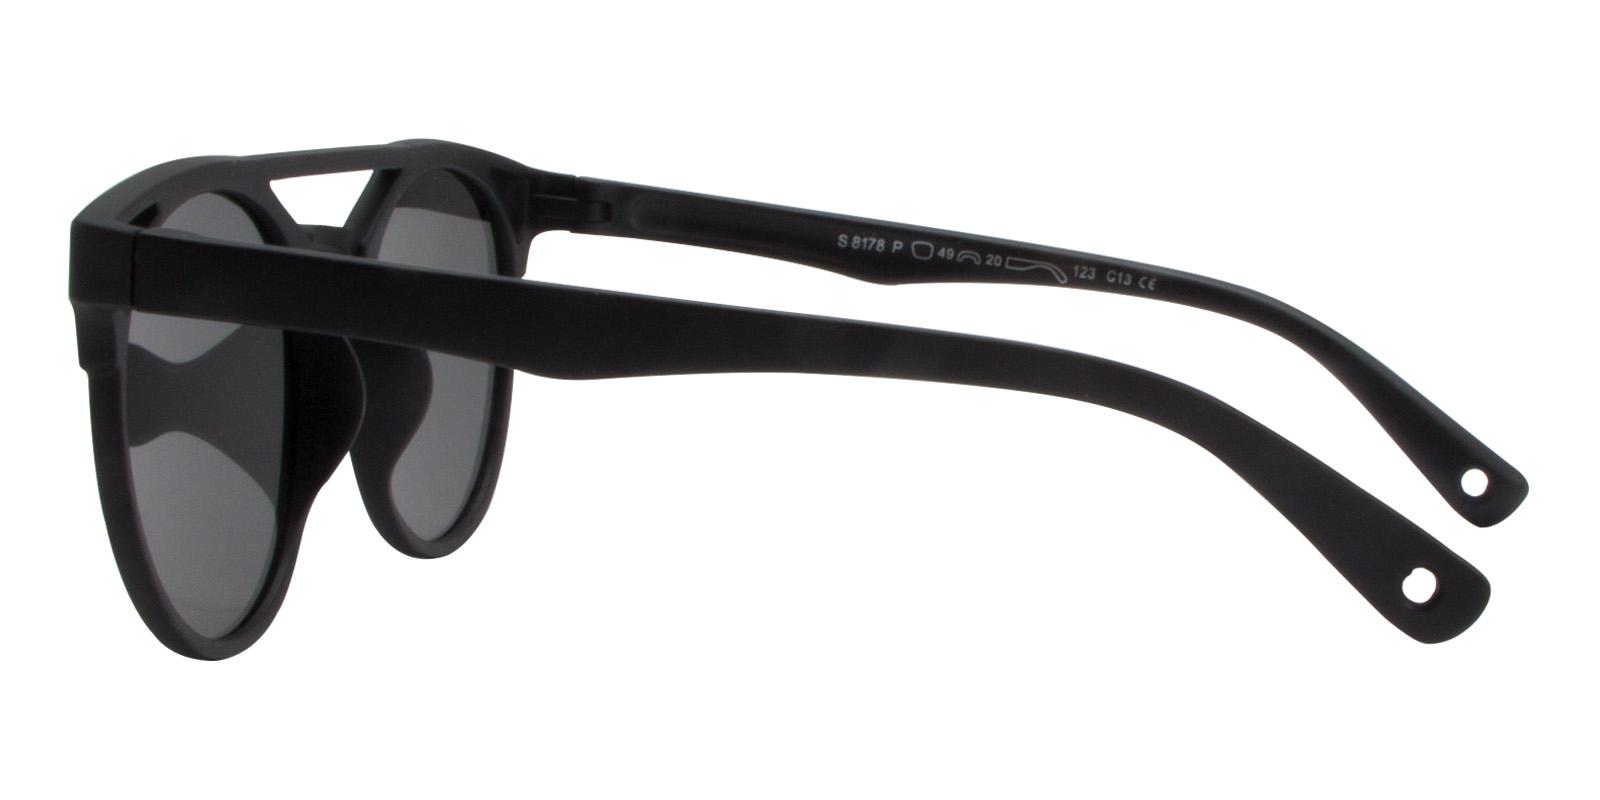 Nix Gray TR Sunglasses Frames from ABBE Glasses